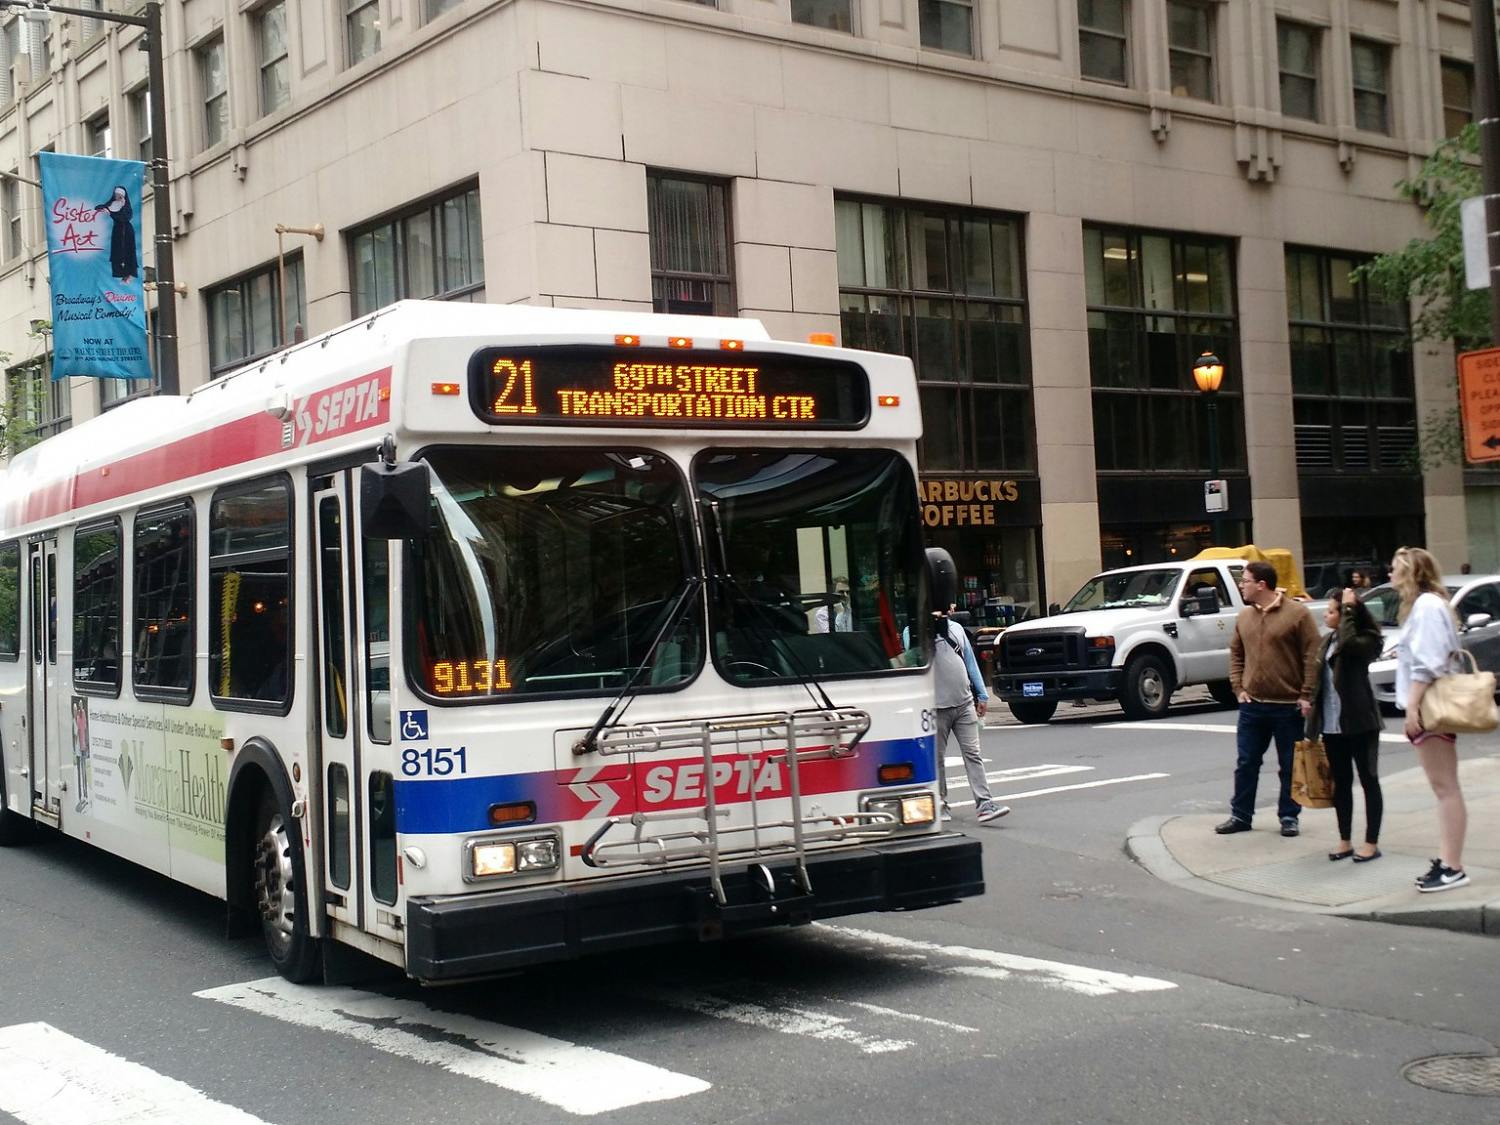 SEPTA’s 21 bus to 69th Transportation Center in Center City Philadelphia | Rowan Arthur